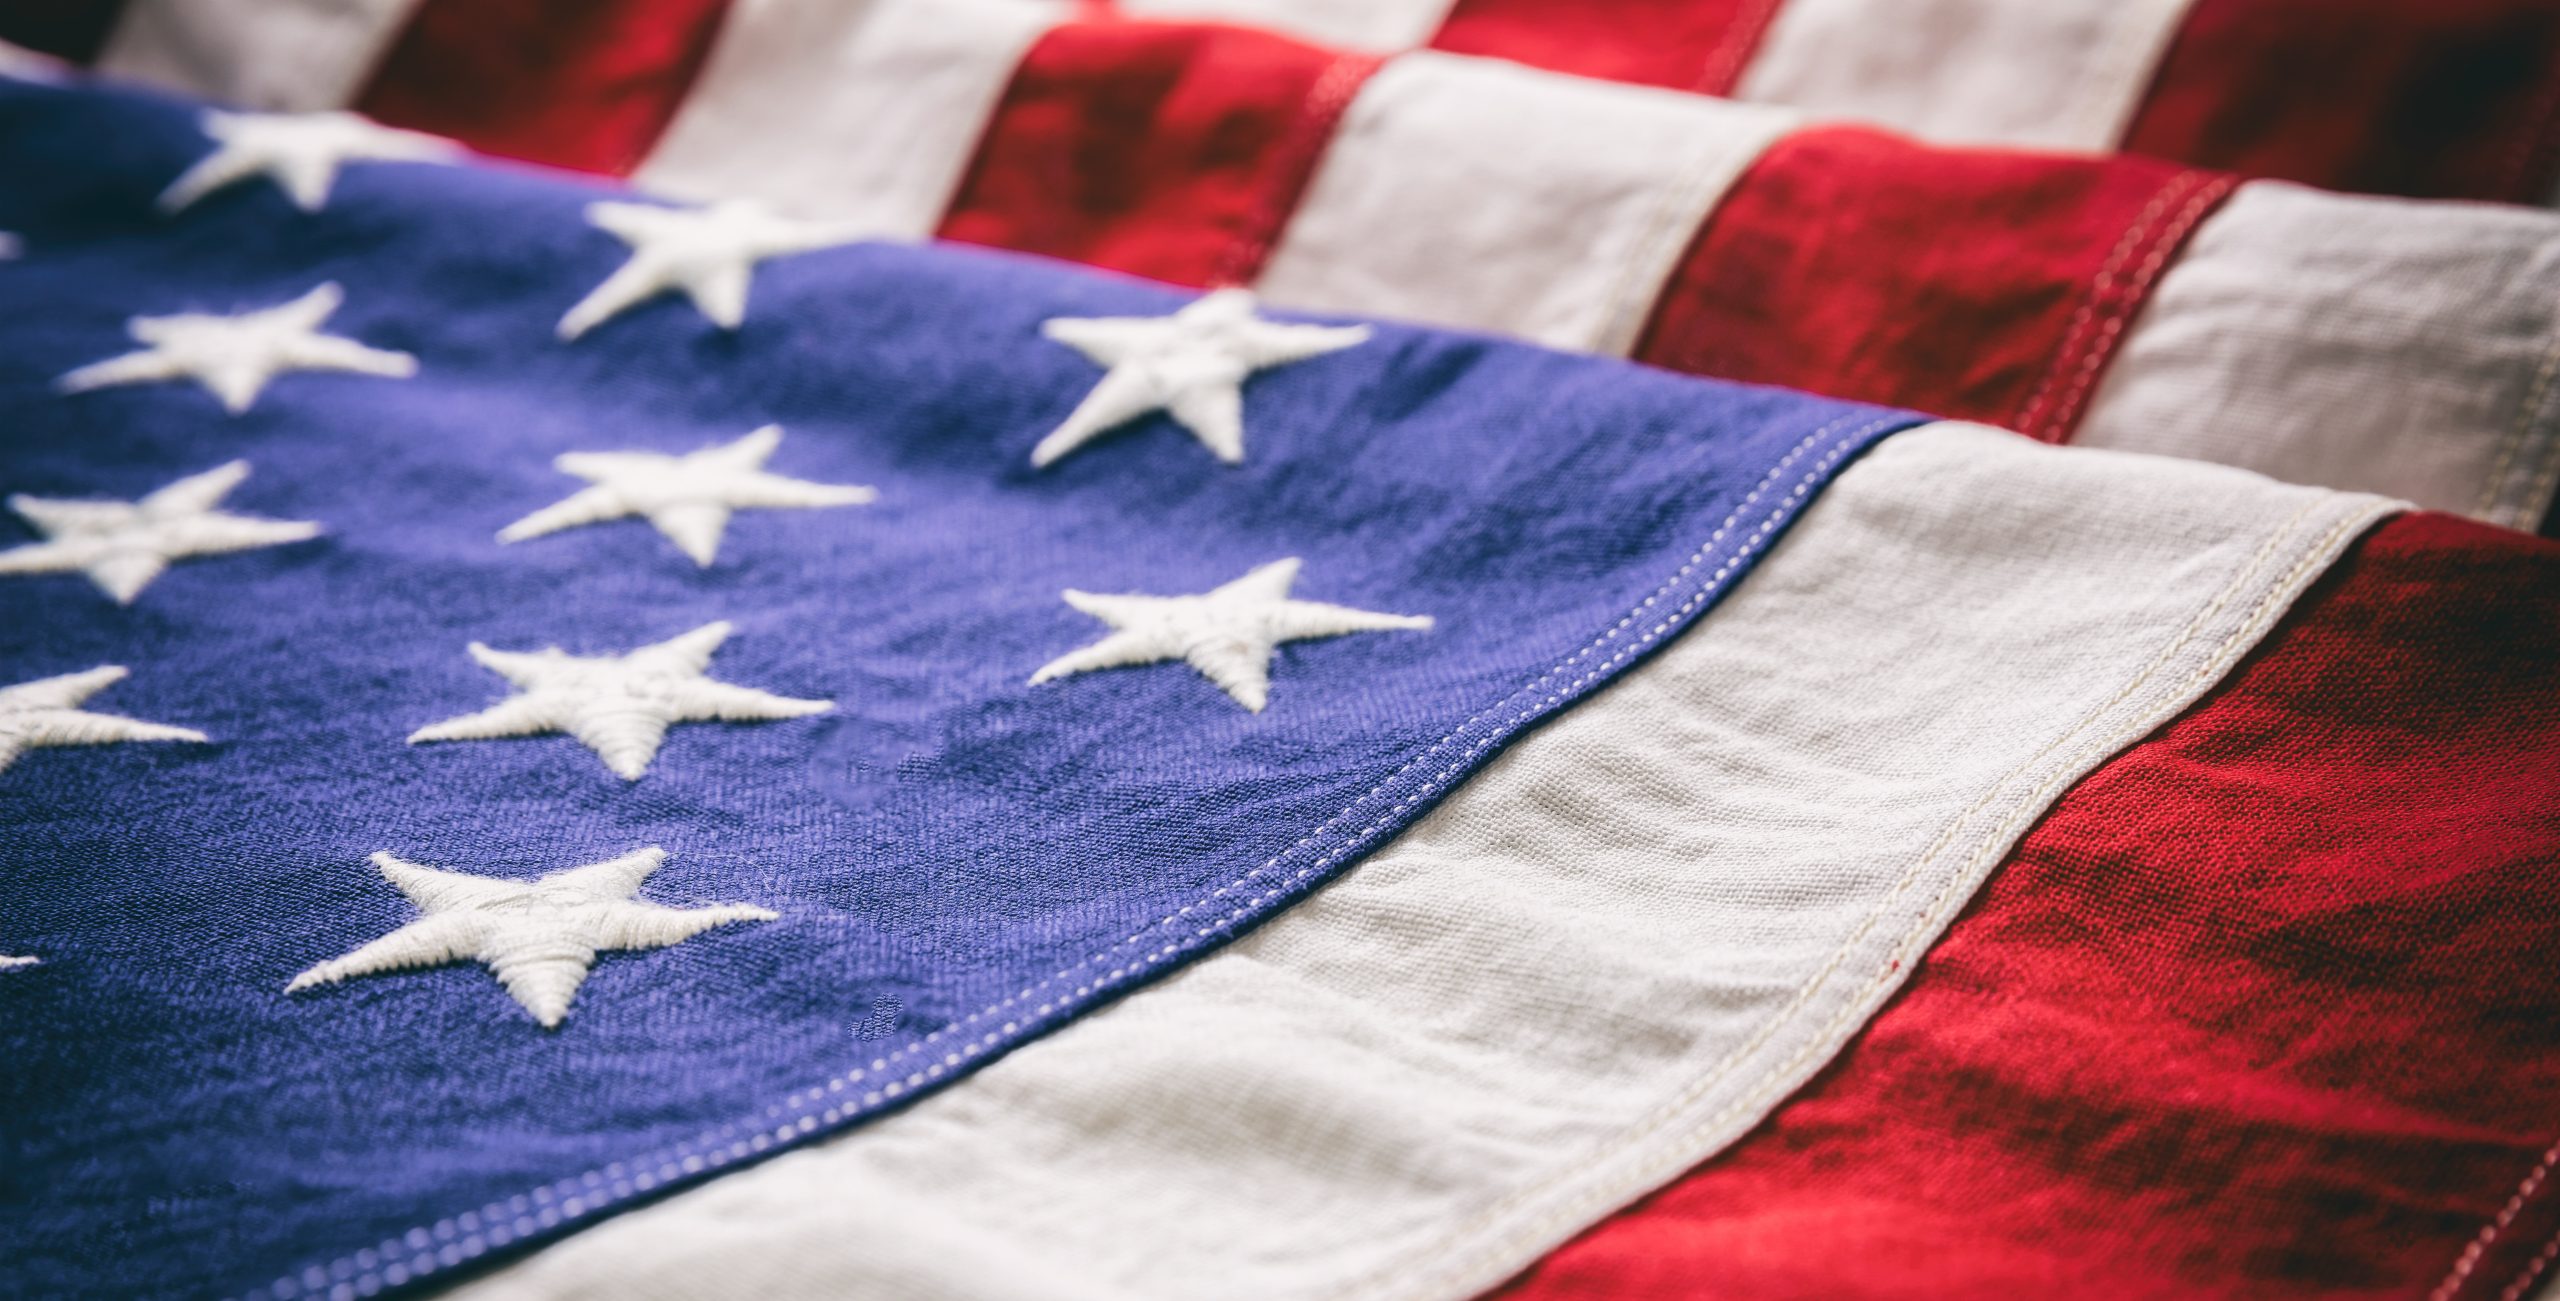 USA flag detail, closeup view. American flag background texture.